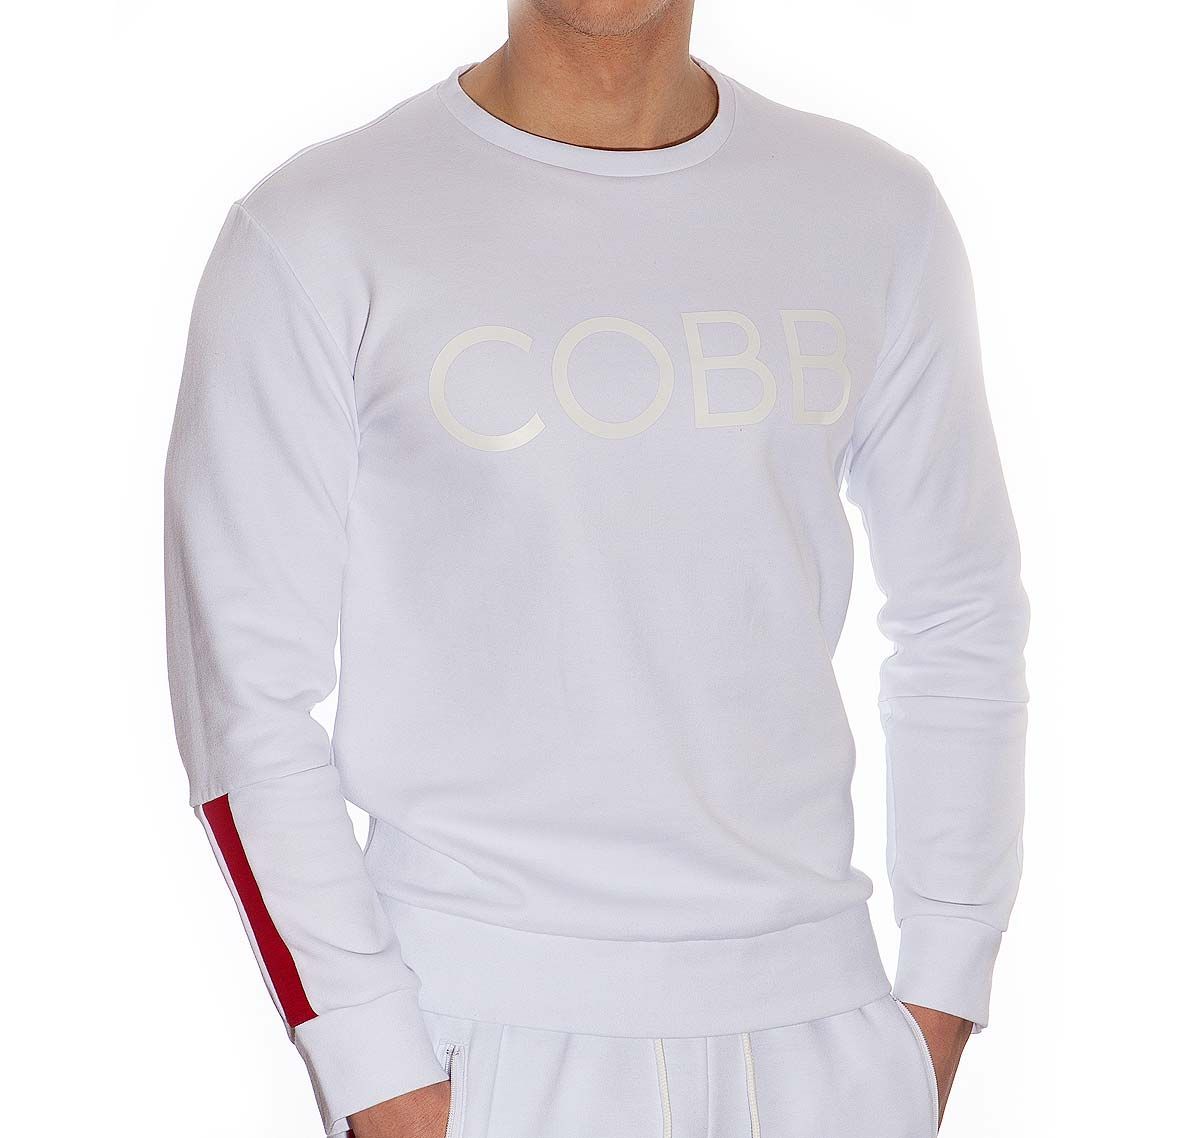 Alexander COBB Sweatshirt SWEETER WHITE, blanc